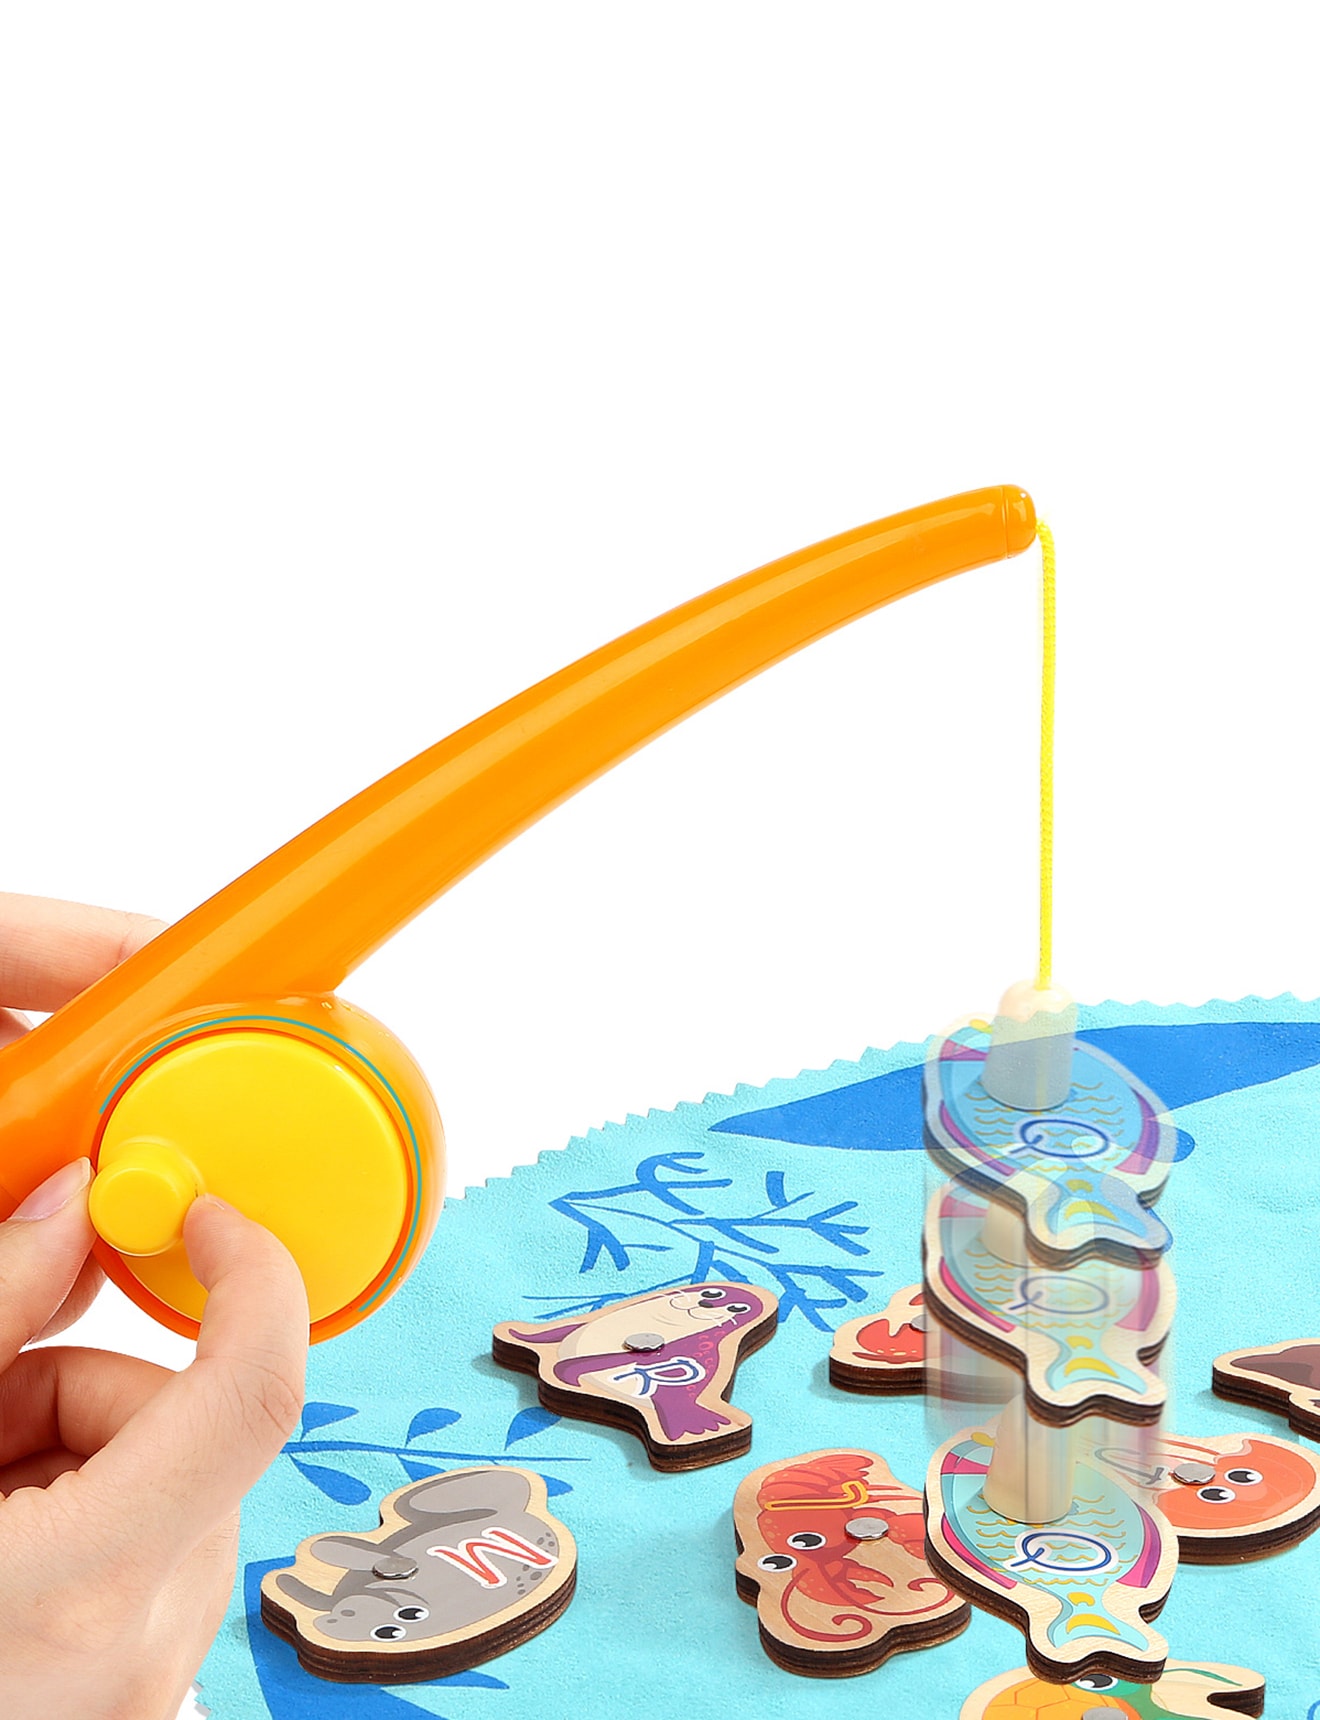 Topbright Magnetic Fishing Game - Infants & Preschool